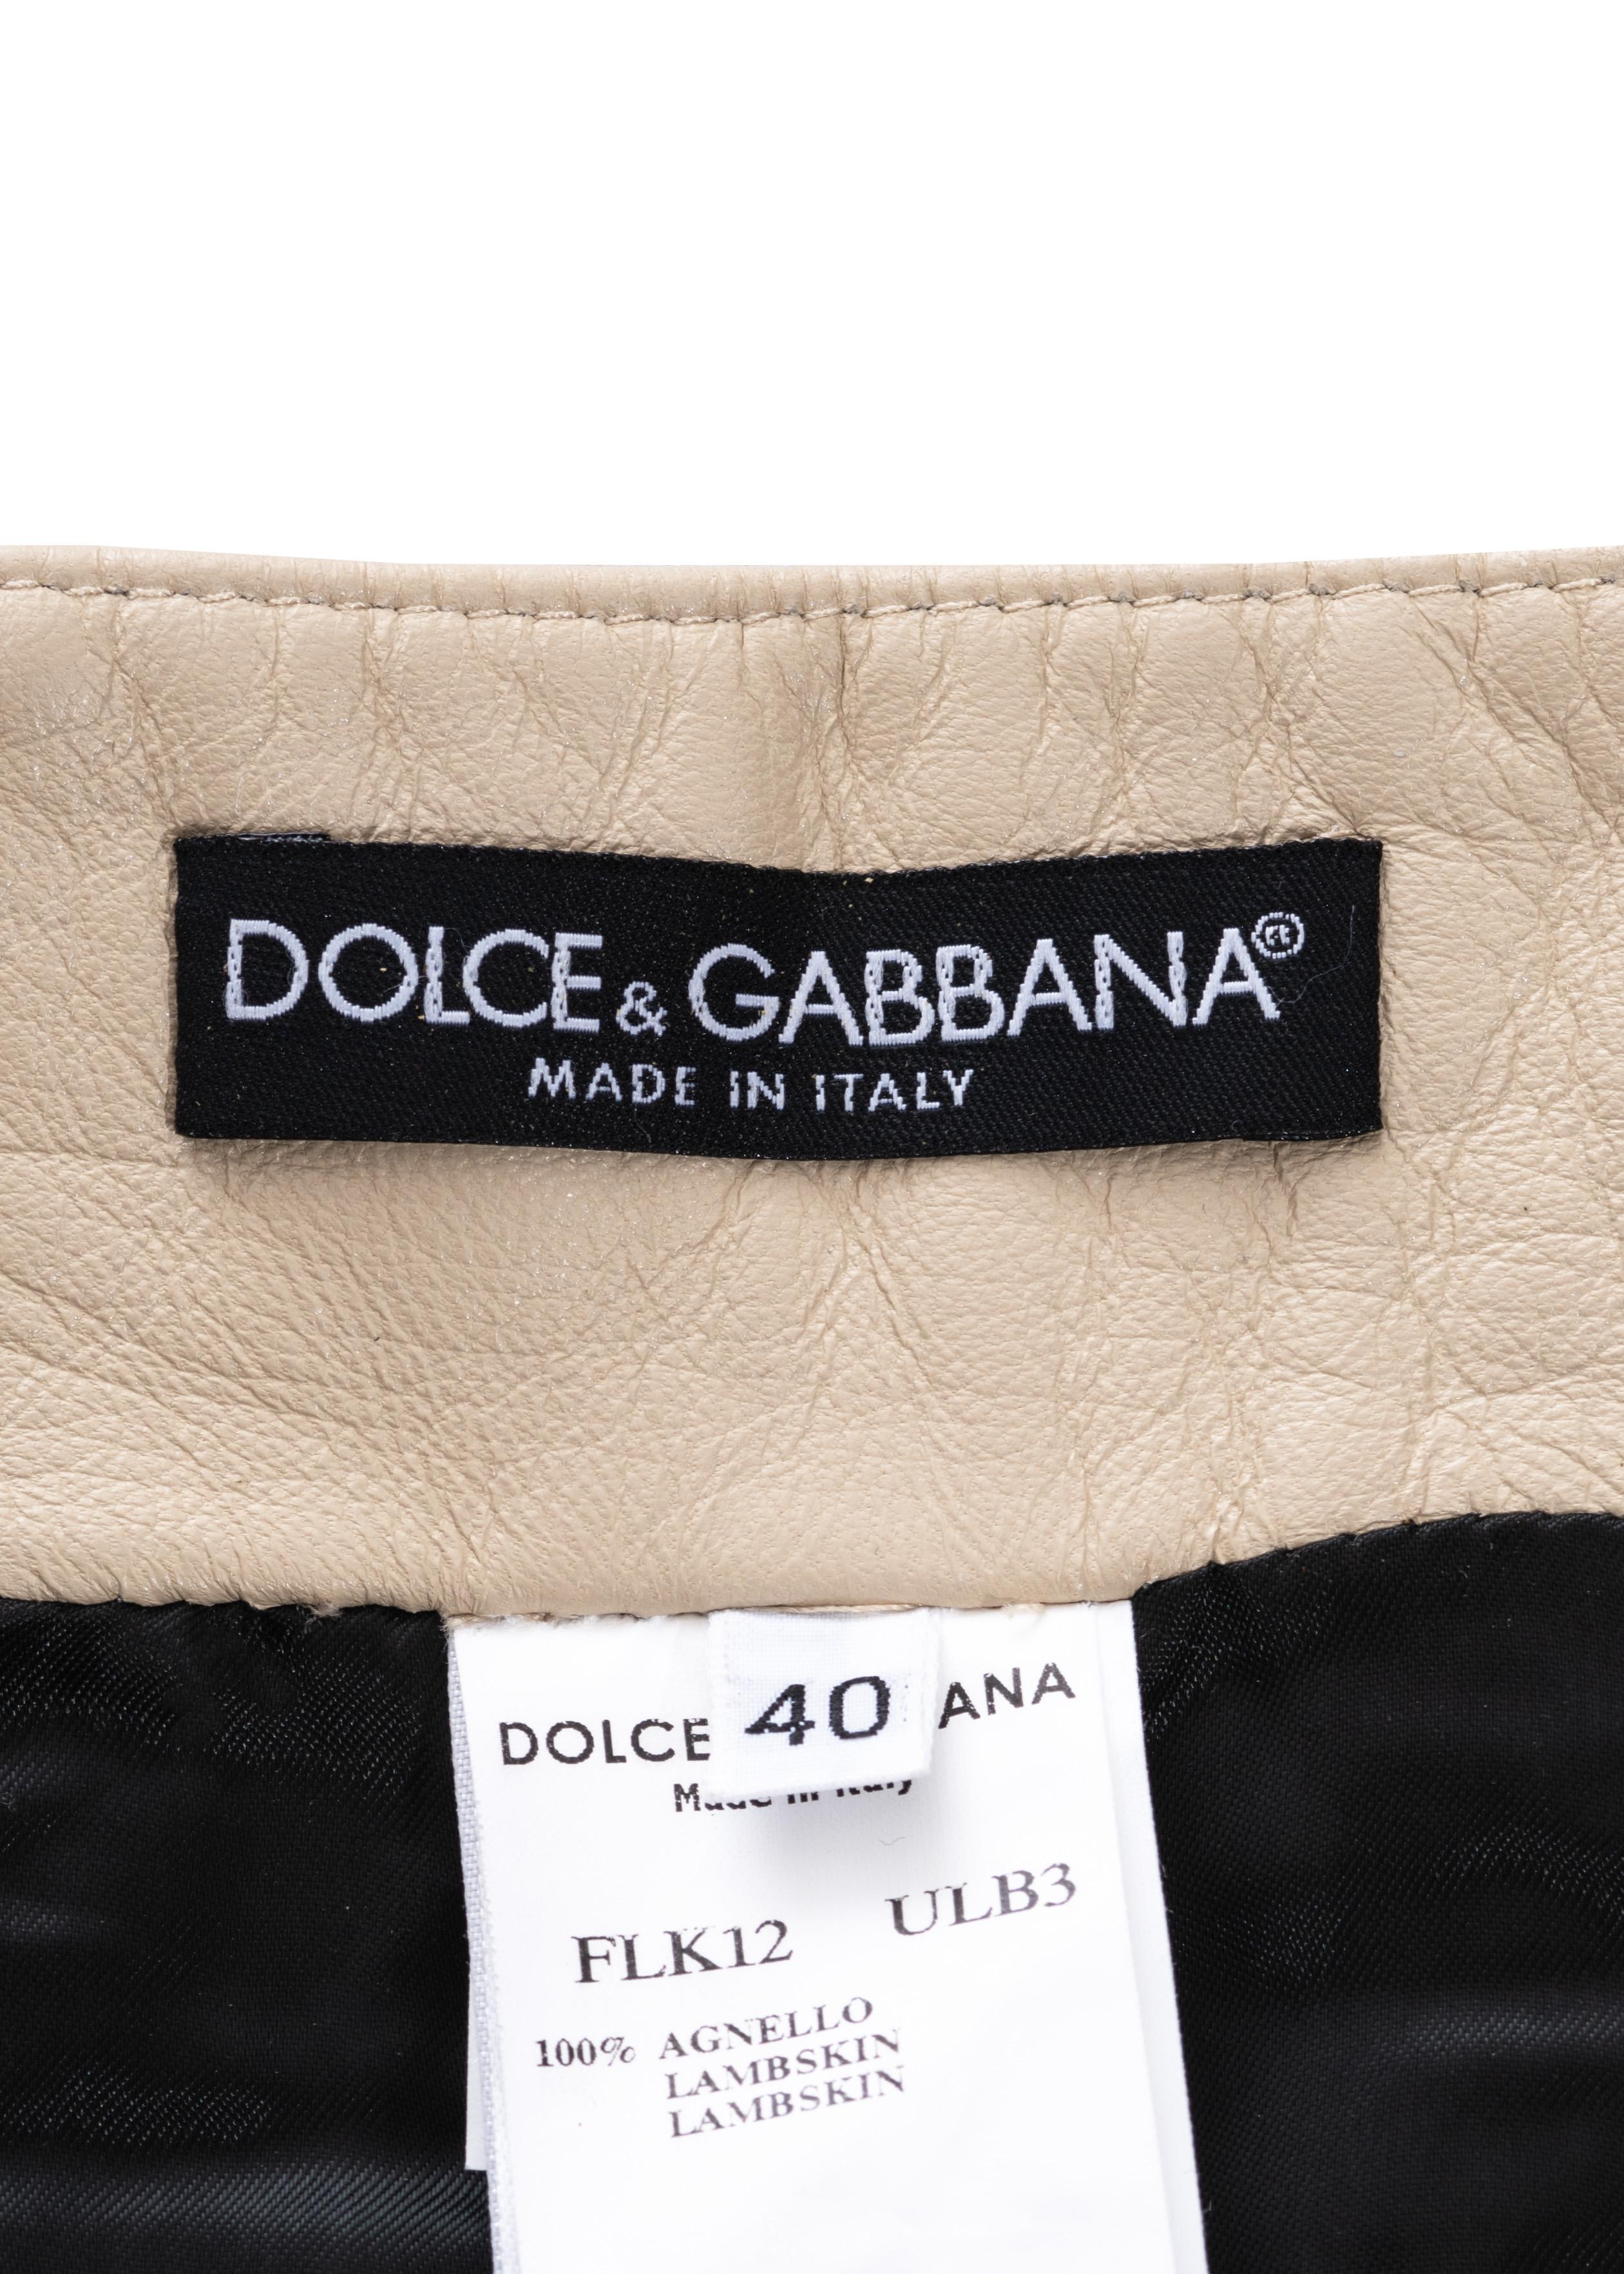 Dolce & Gabbana cream lambskin leather buckled mini skirt, ss 2003 1